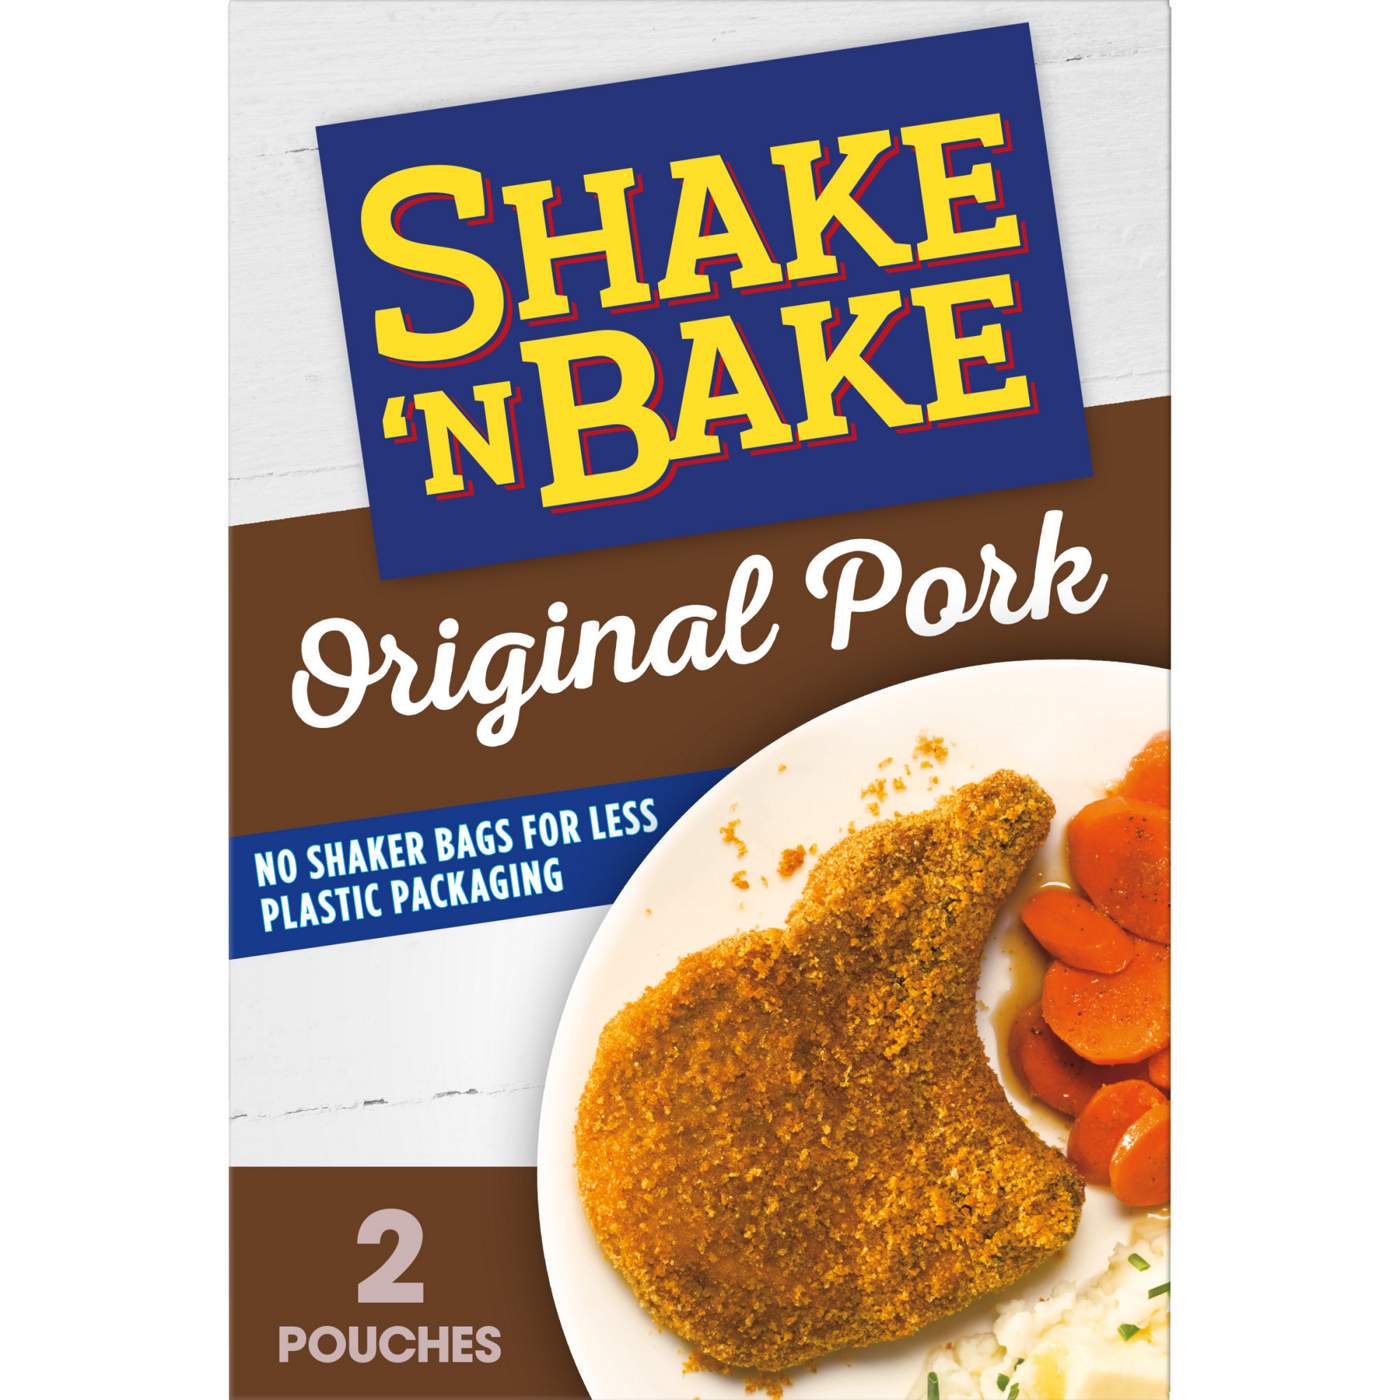 Shake 'N Bake Original Pork Seasoned Coating Mix - Shop Breading & Crumbs  at H-E-B